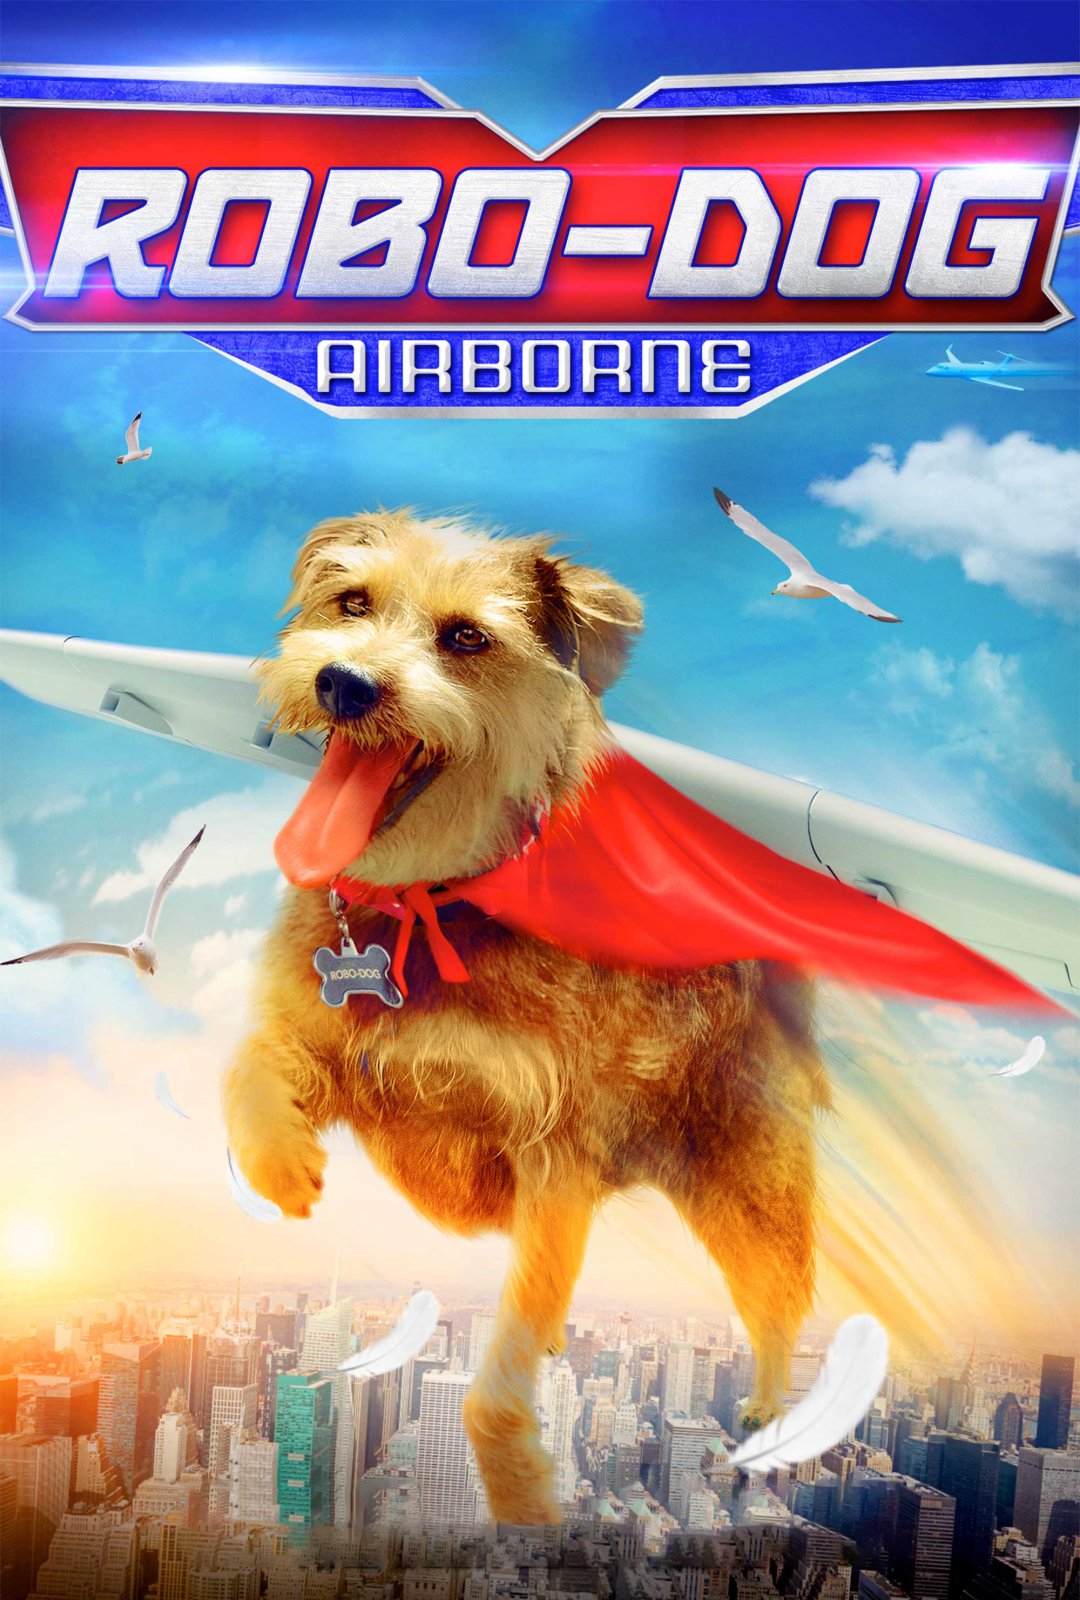 Robo-dog: Airborne